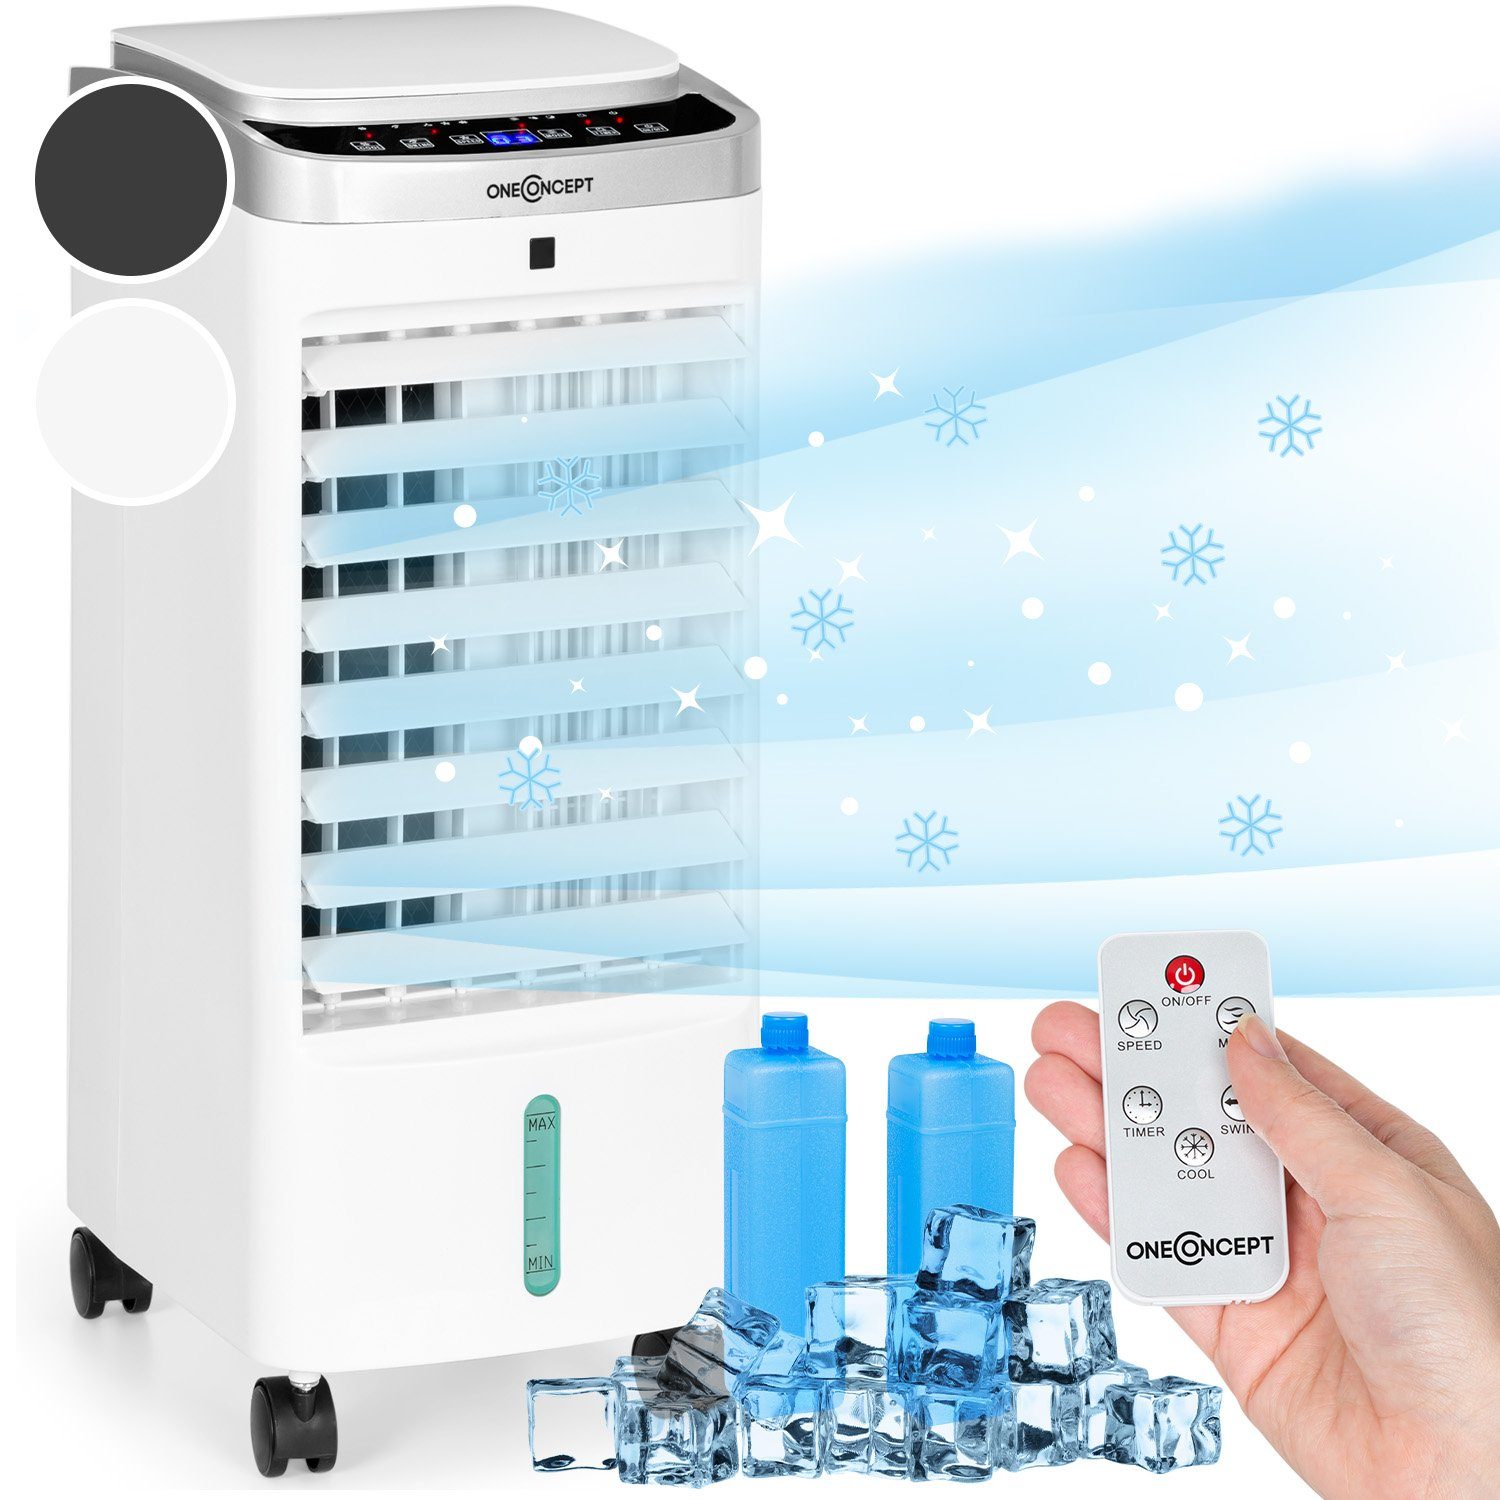 ONECONCEPT Ventilatorkombigerät Freshboxx Pro 3-in-1 Luftkühler, Klimagerät  mobile Klimaanlage mobil Air Conditioner Air Cooler